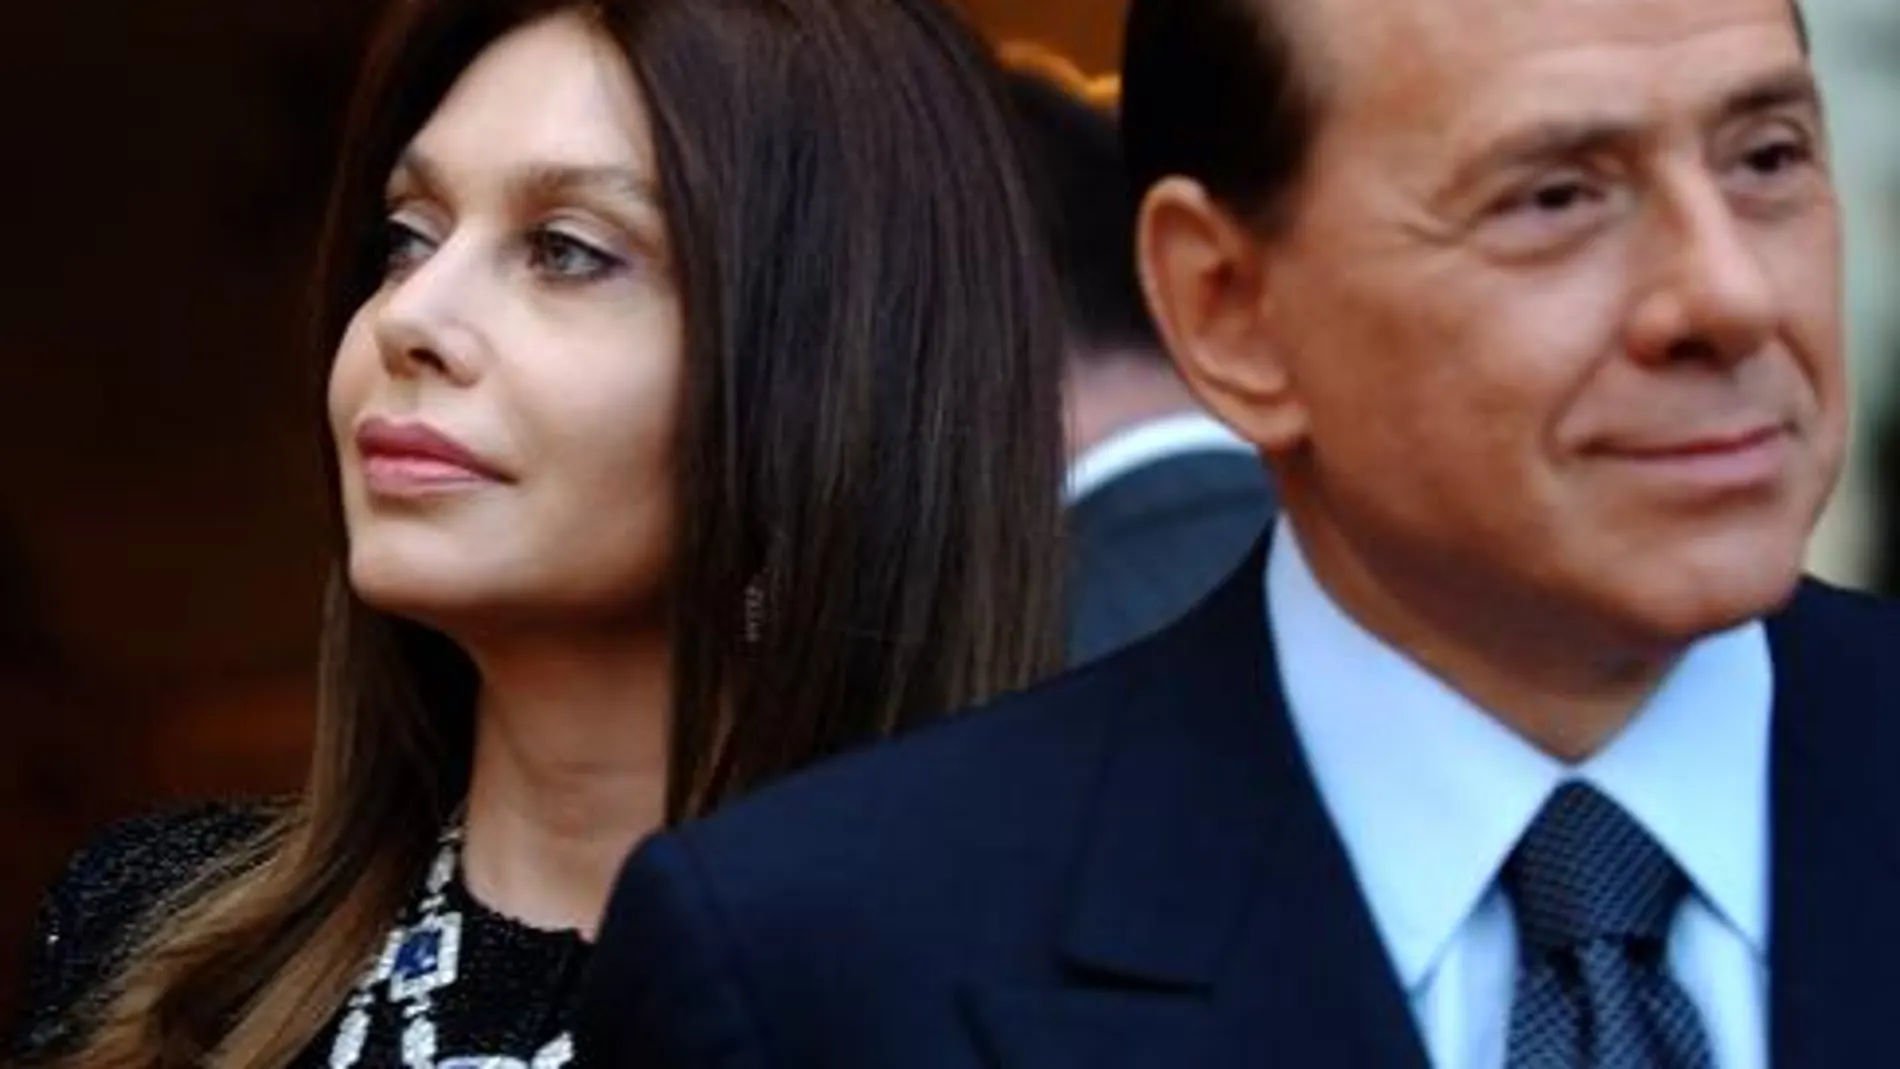 La mujer de Berlusconi rehace la lista europea